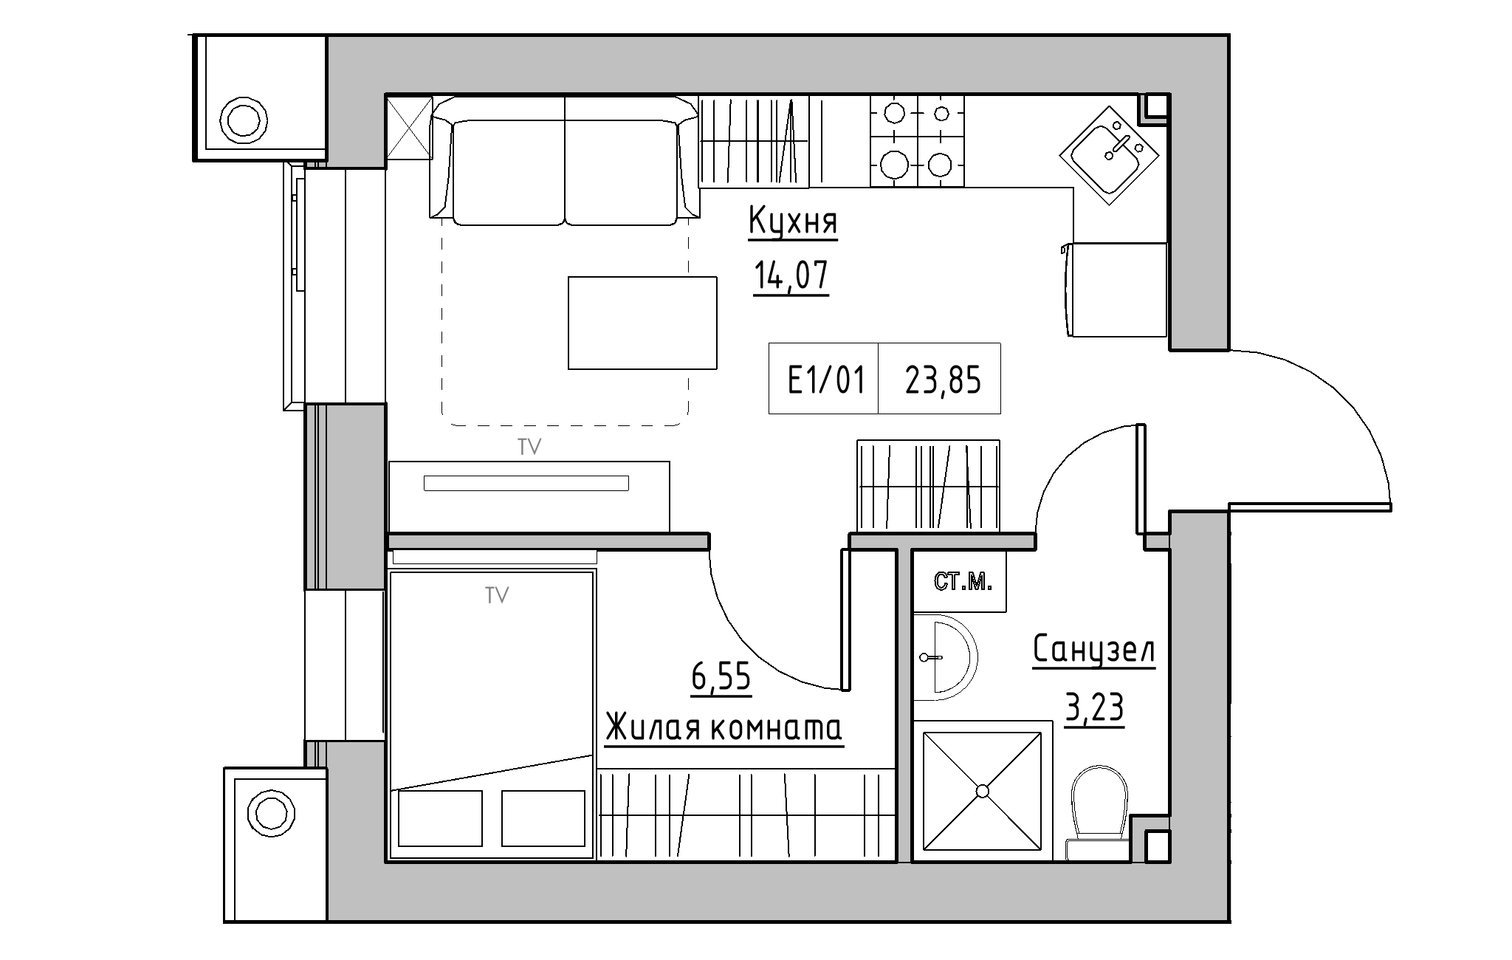 Planning 1-rm flats area 23.85m2, KS-013-02/0003.